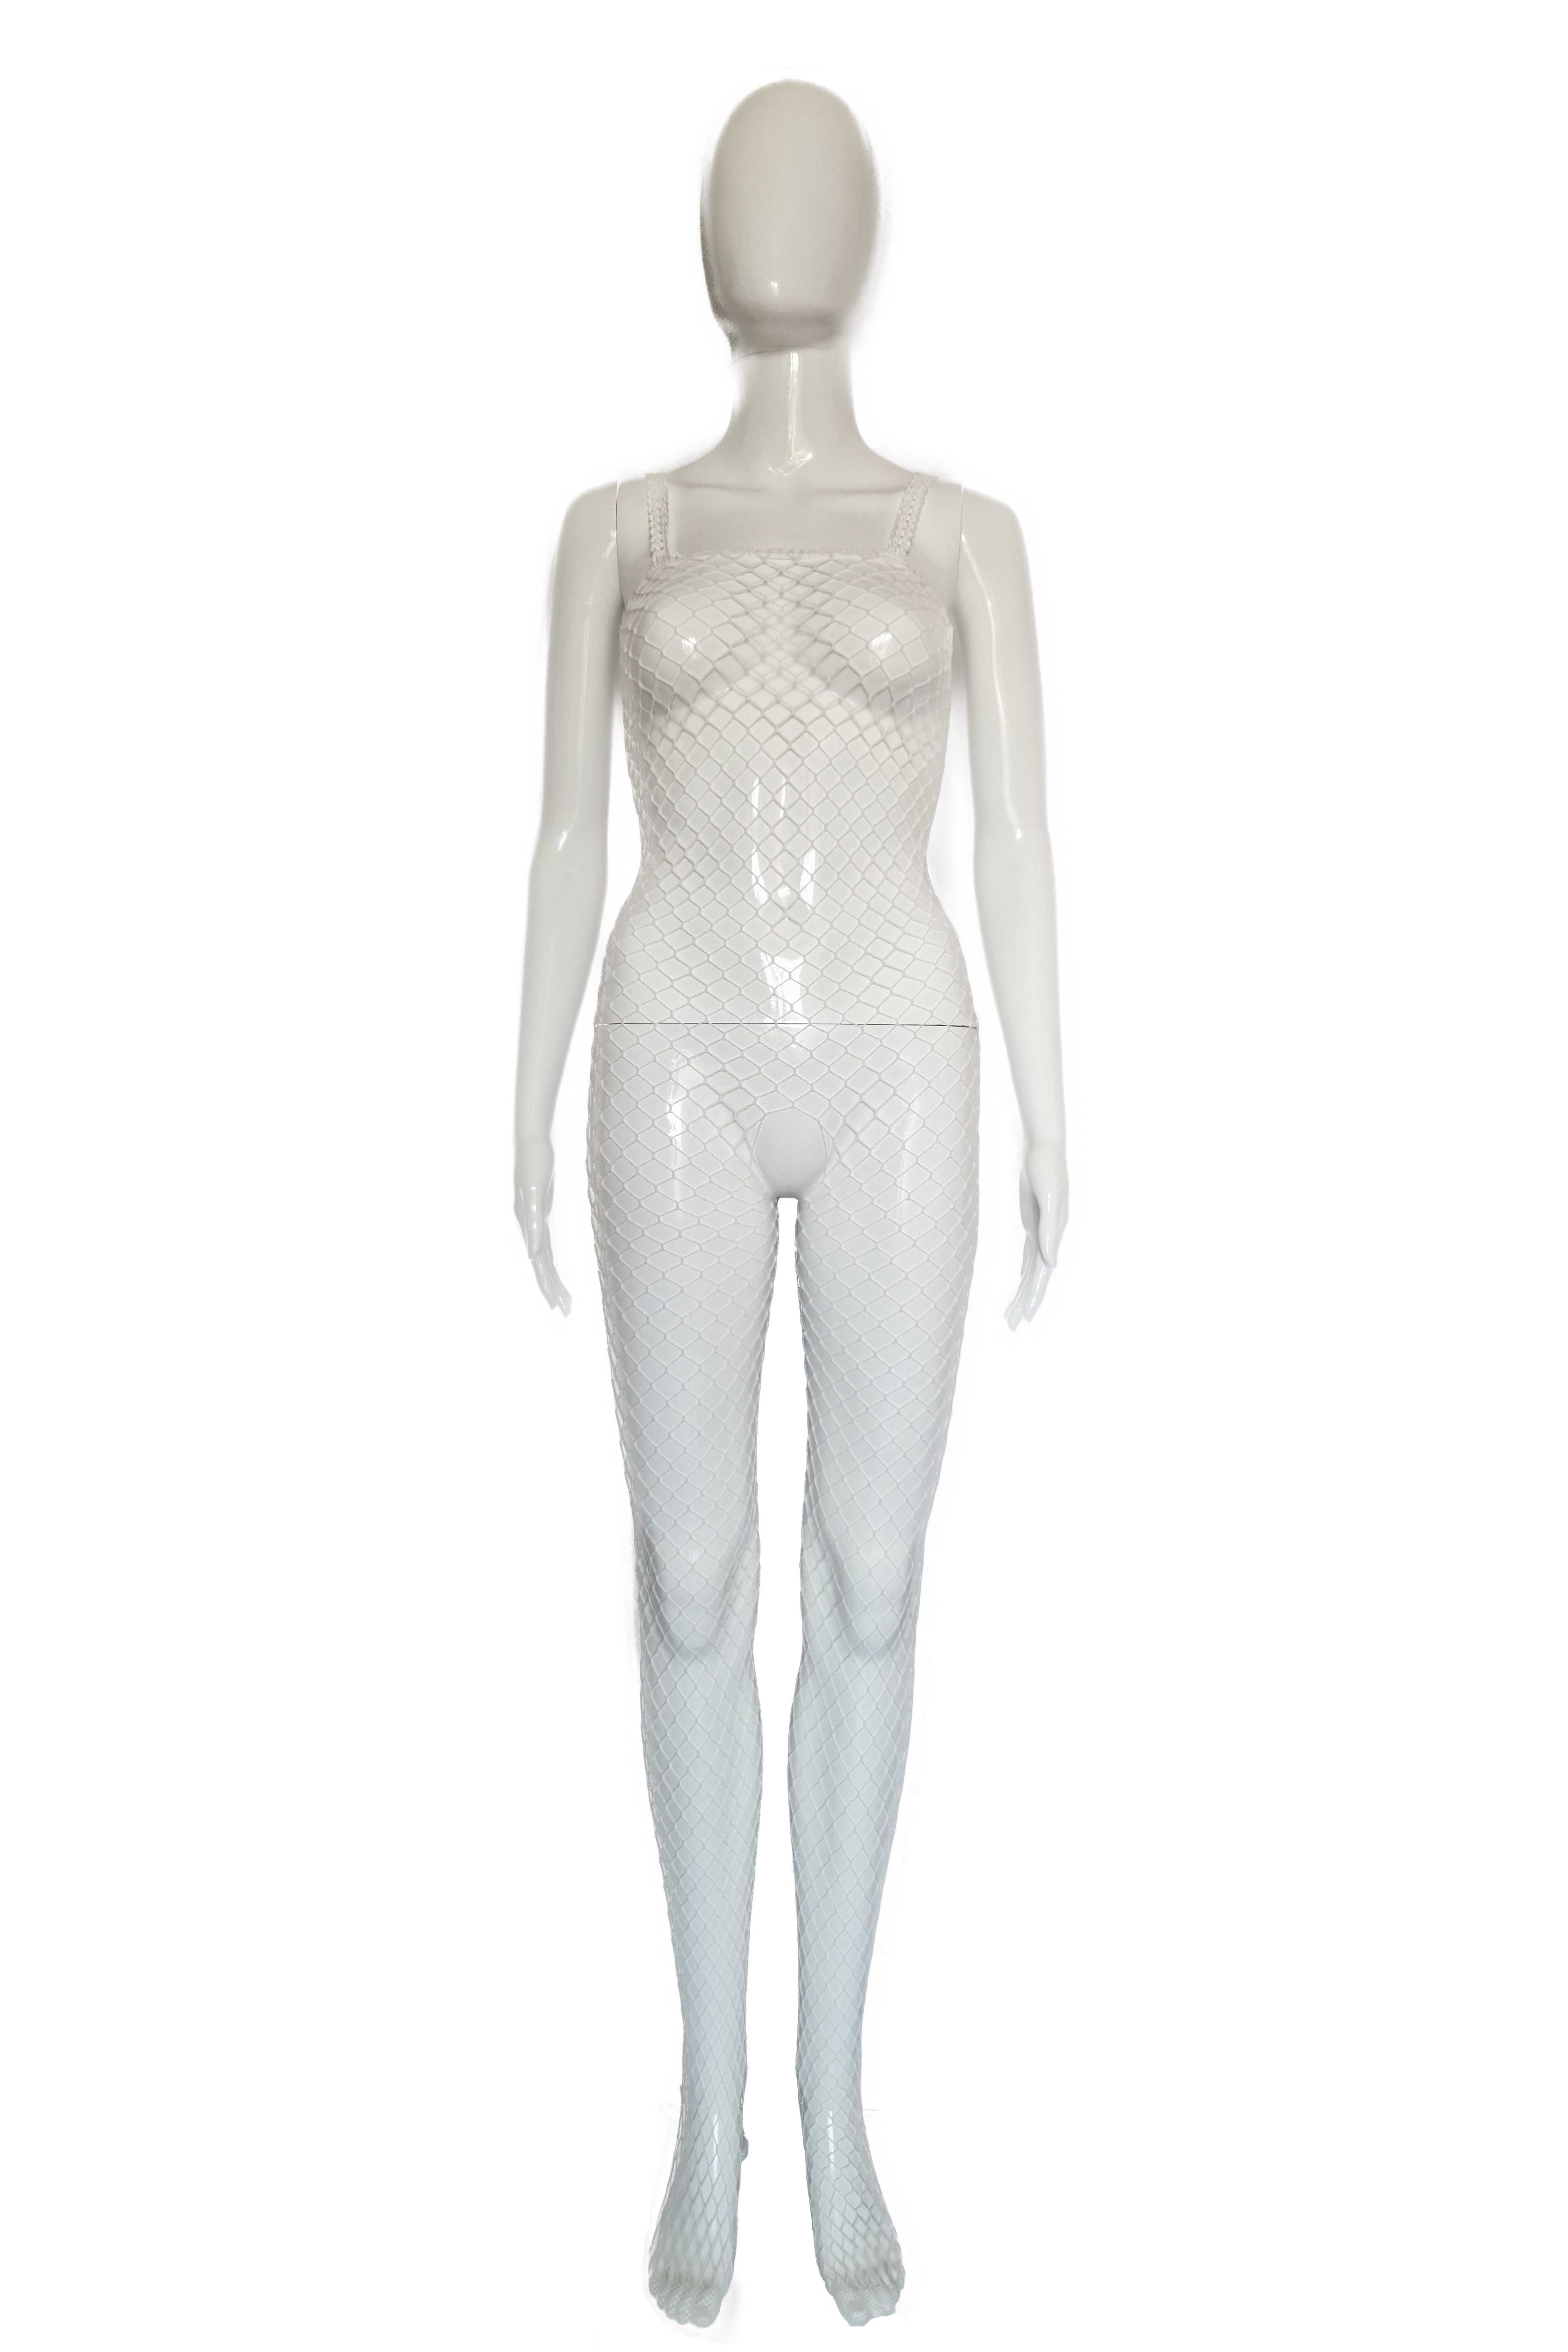 Lenjerie Erotica Bodysuit Open Crotch, Fosforescent, One Size